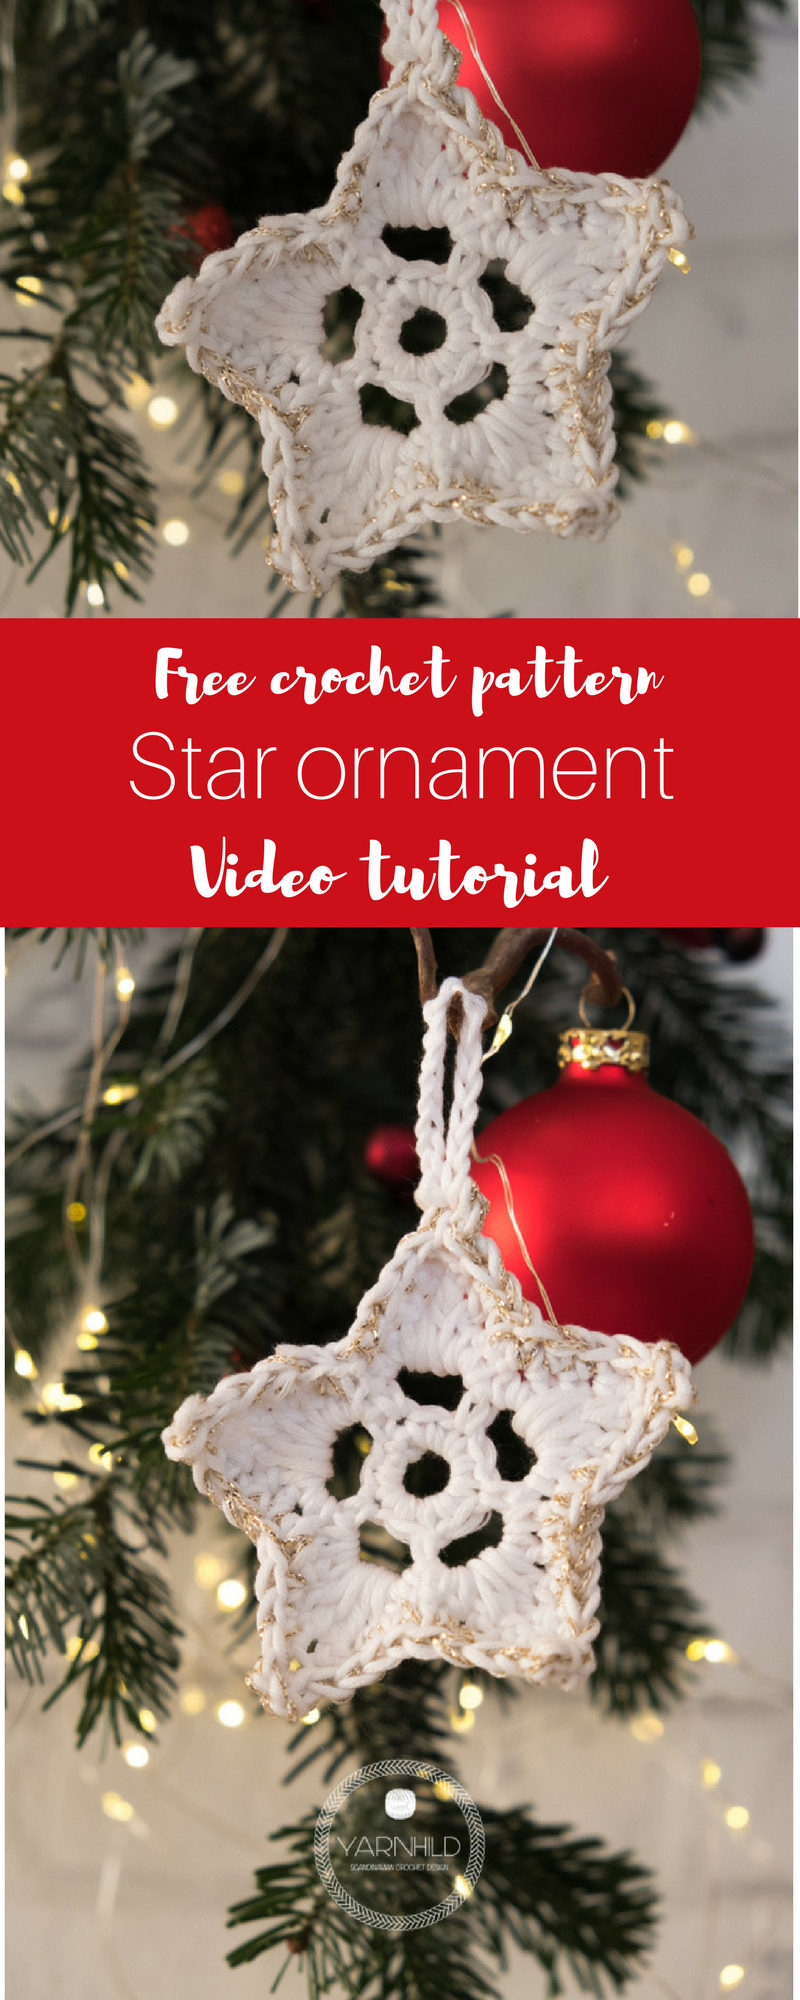 crochet ornament Christmas star/Christmas star ornament 